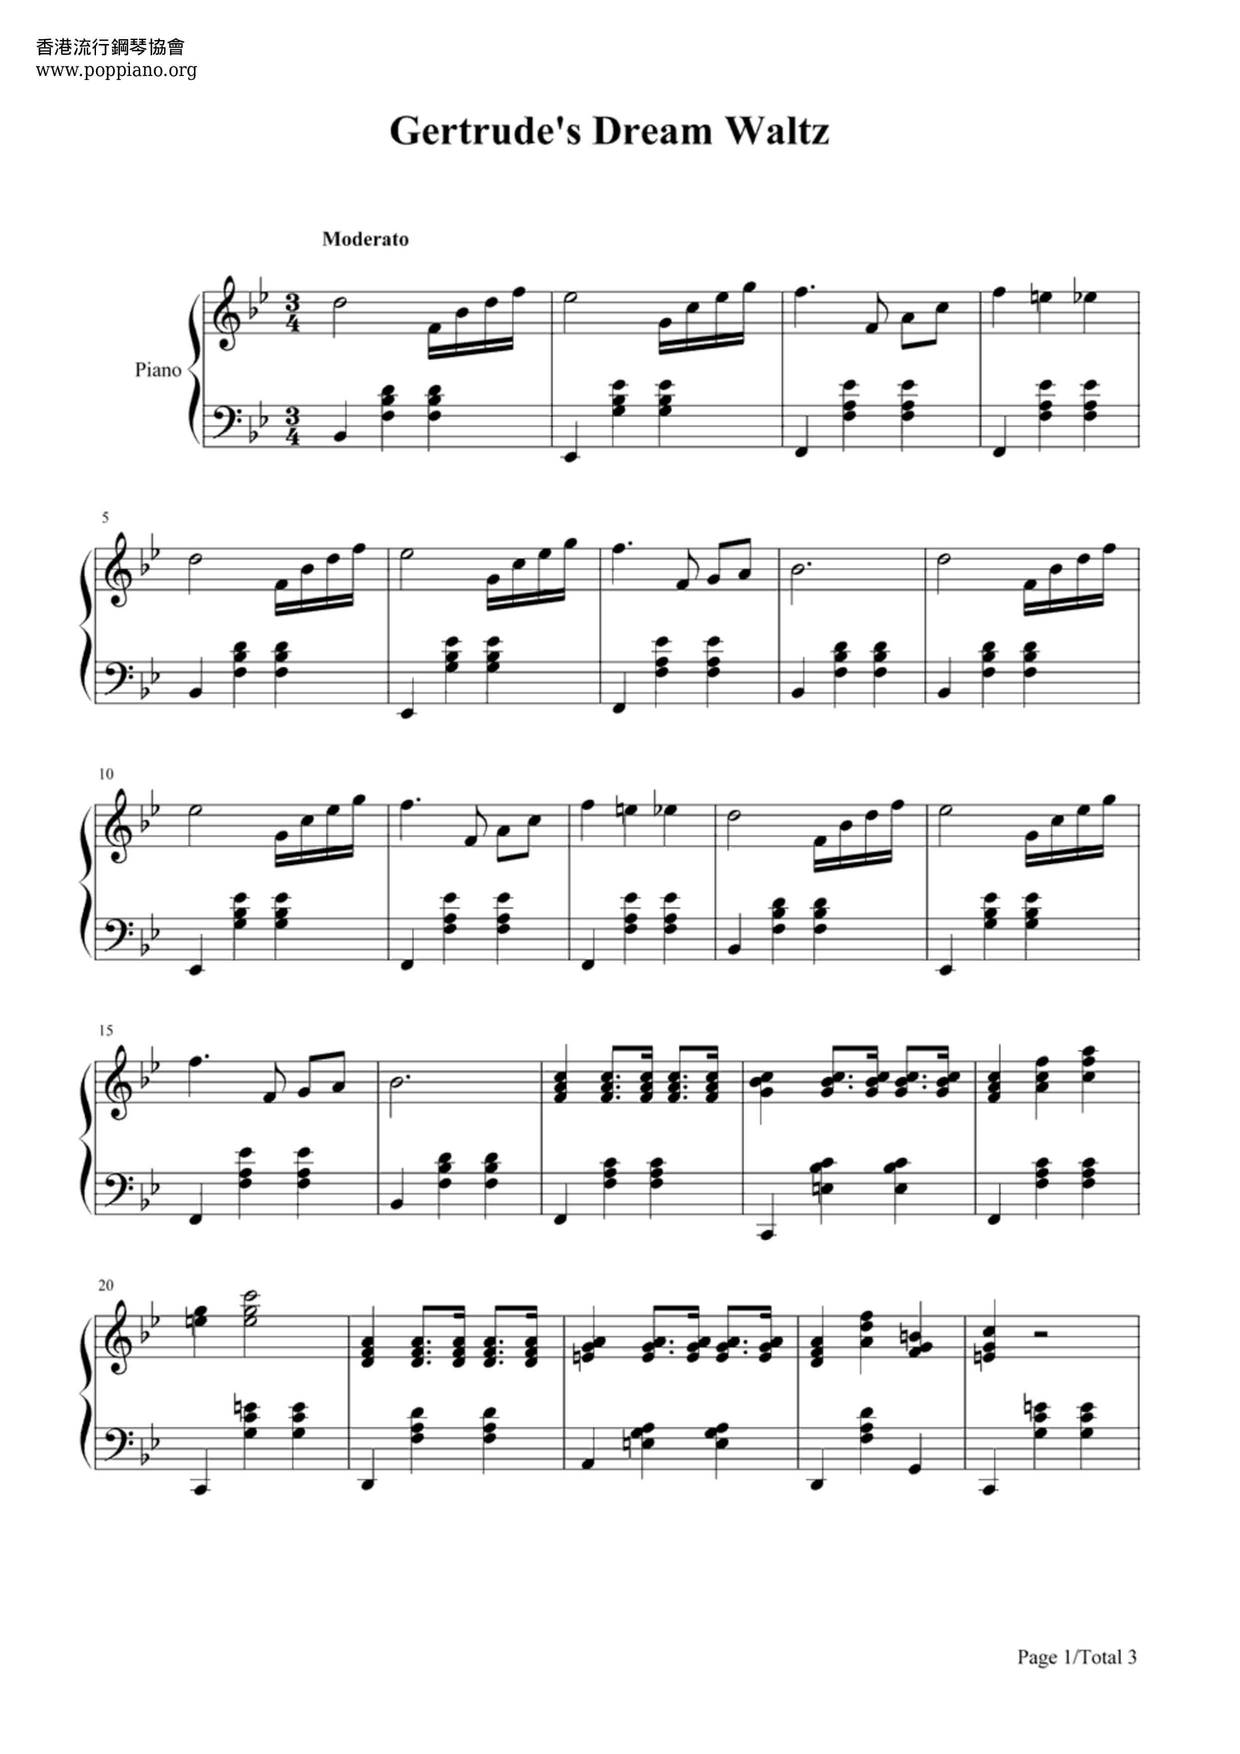 Gertrude's Dream Waltz Score